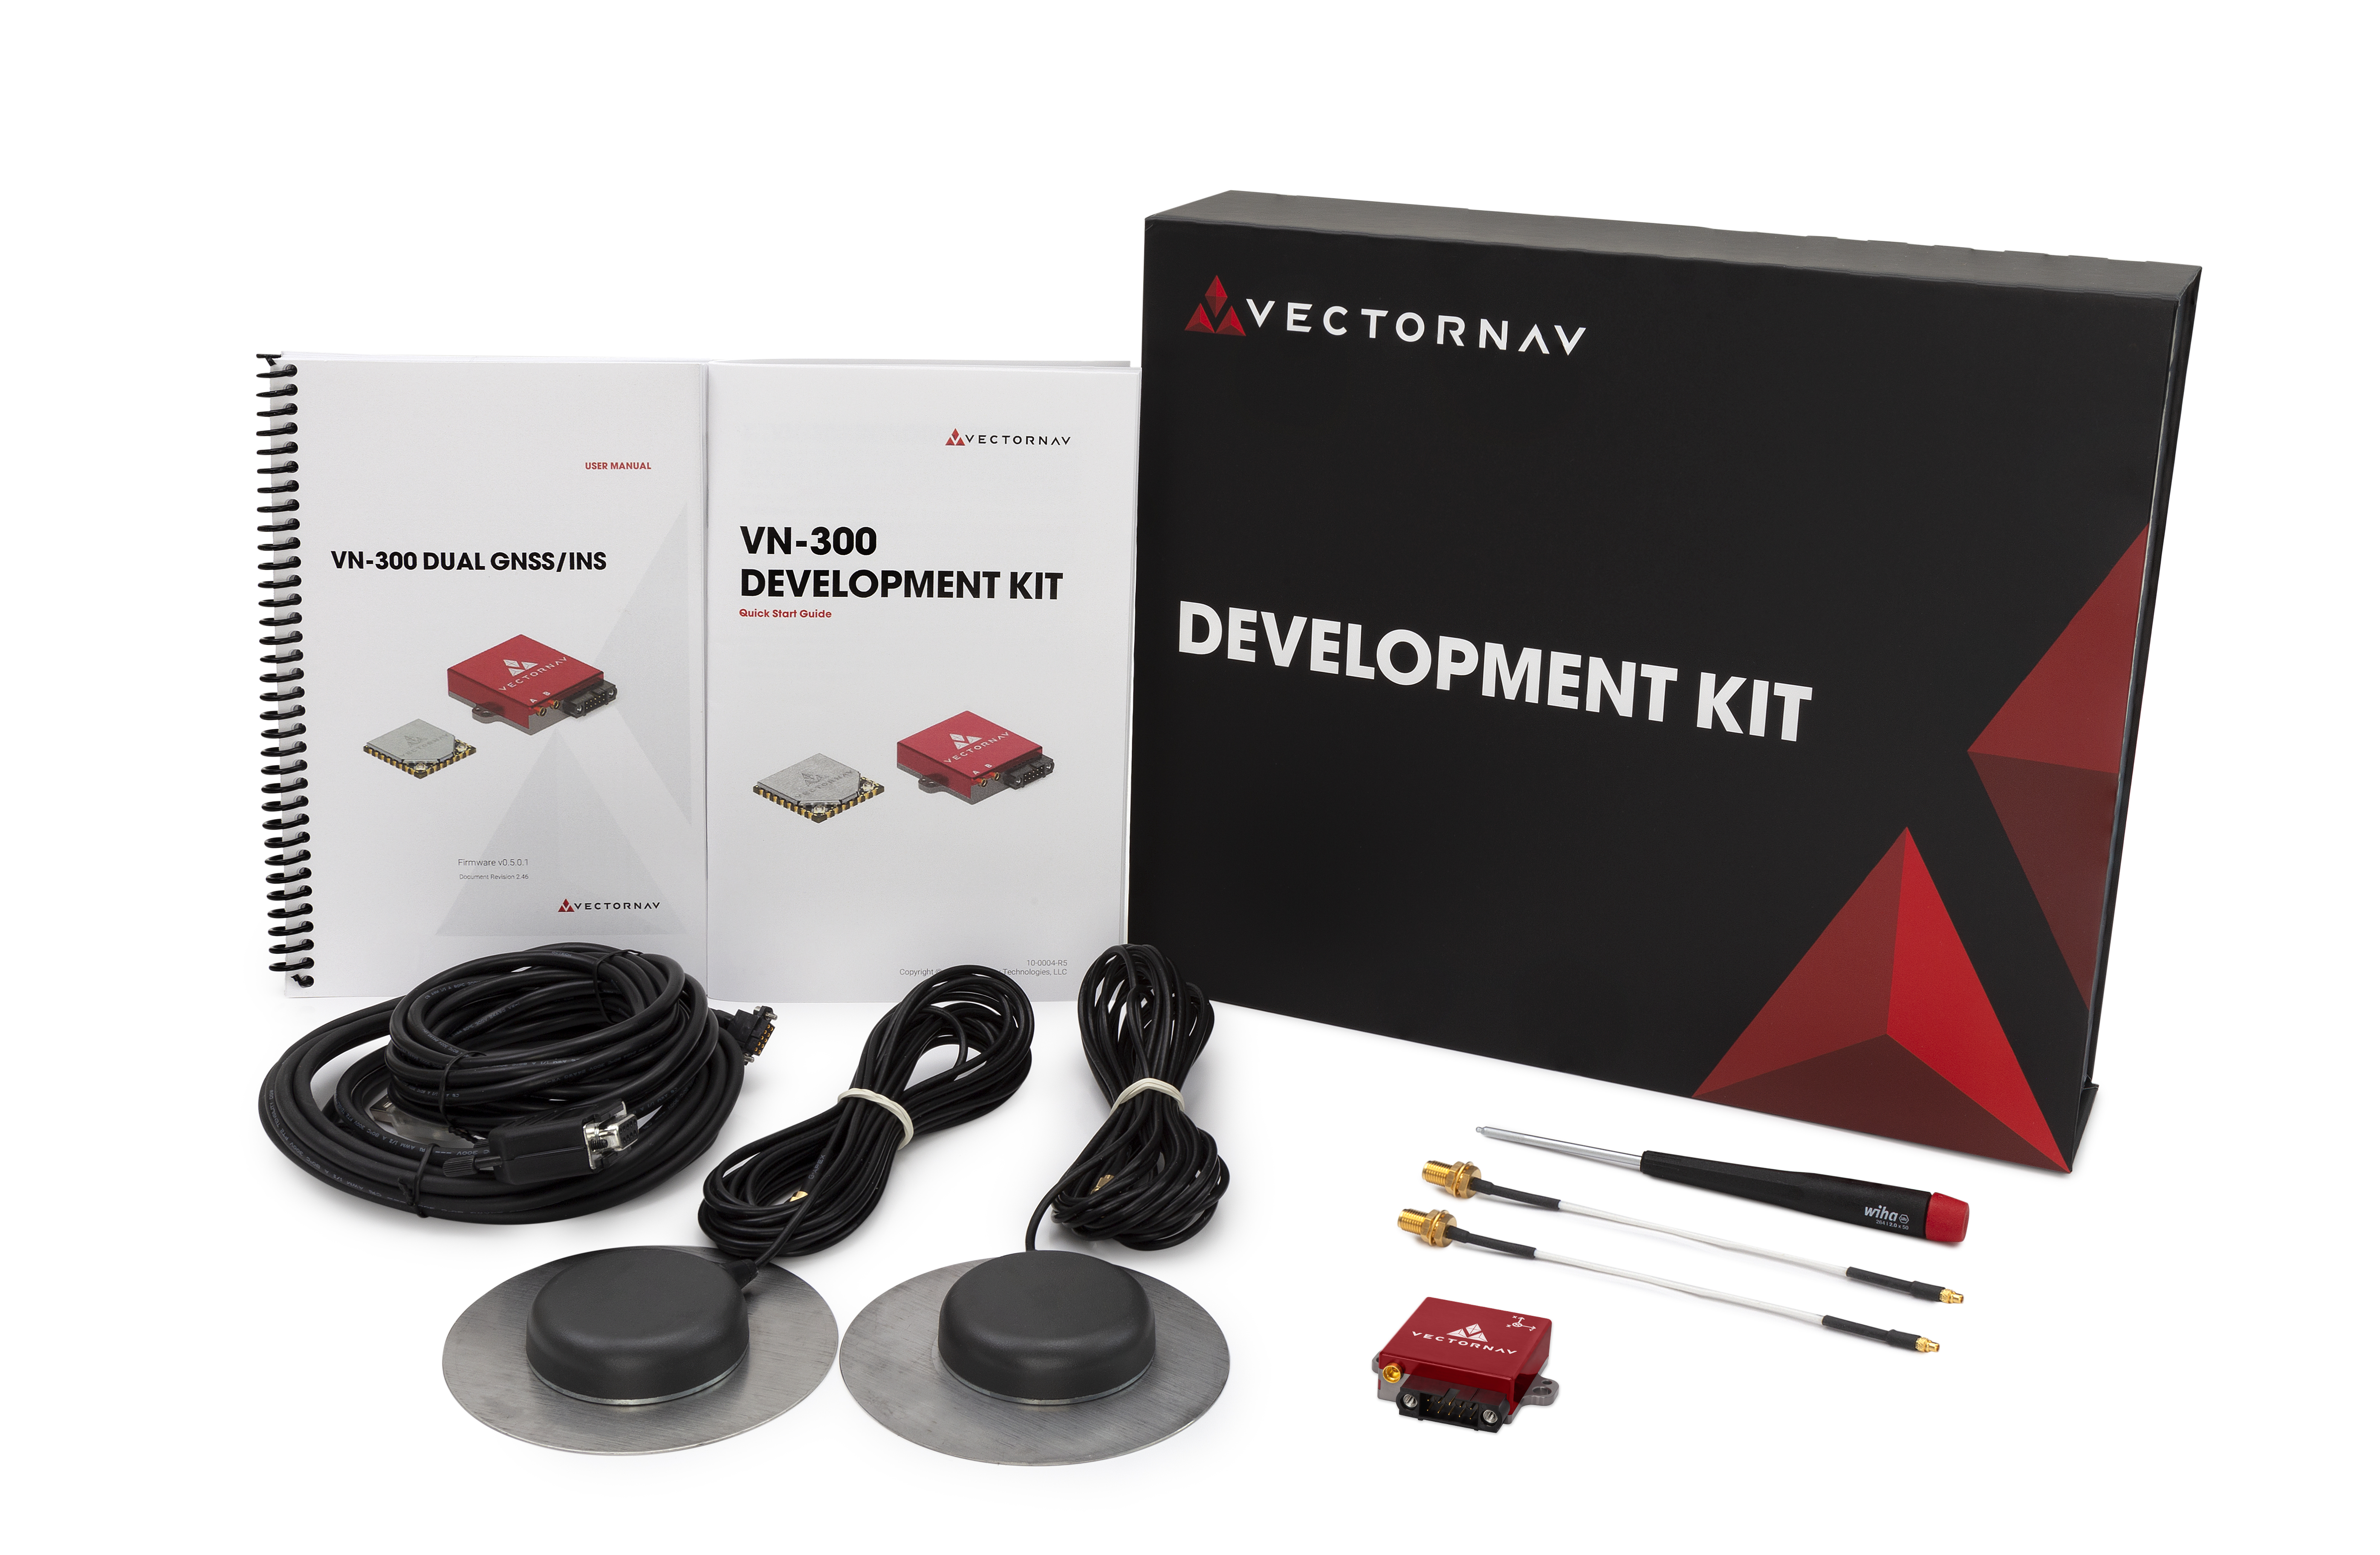 VN-300 Rugged Development Kit